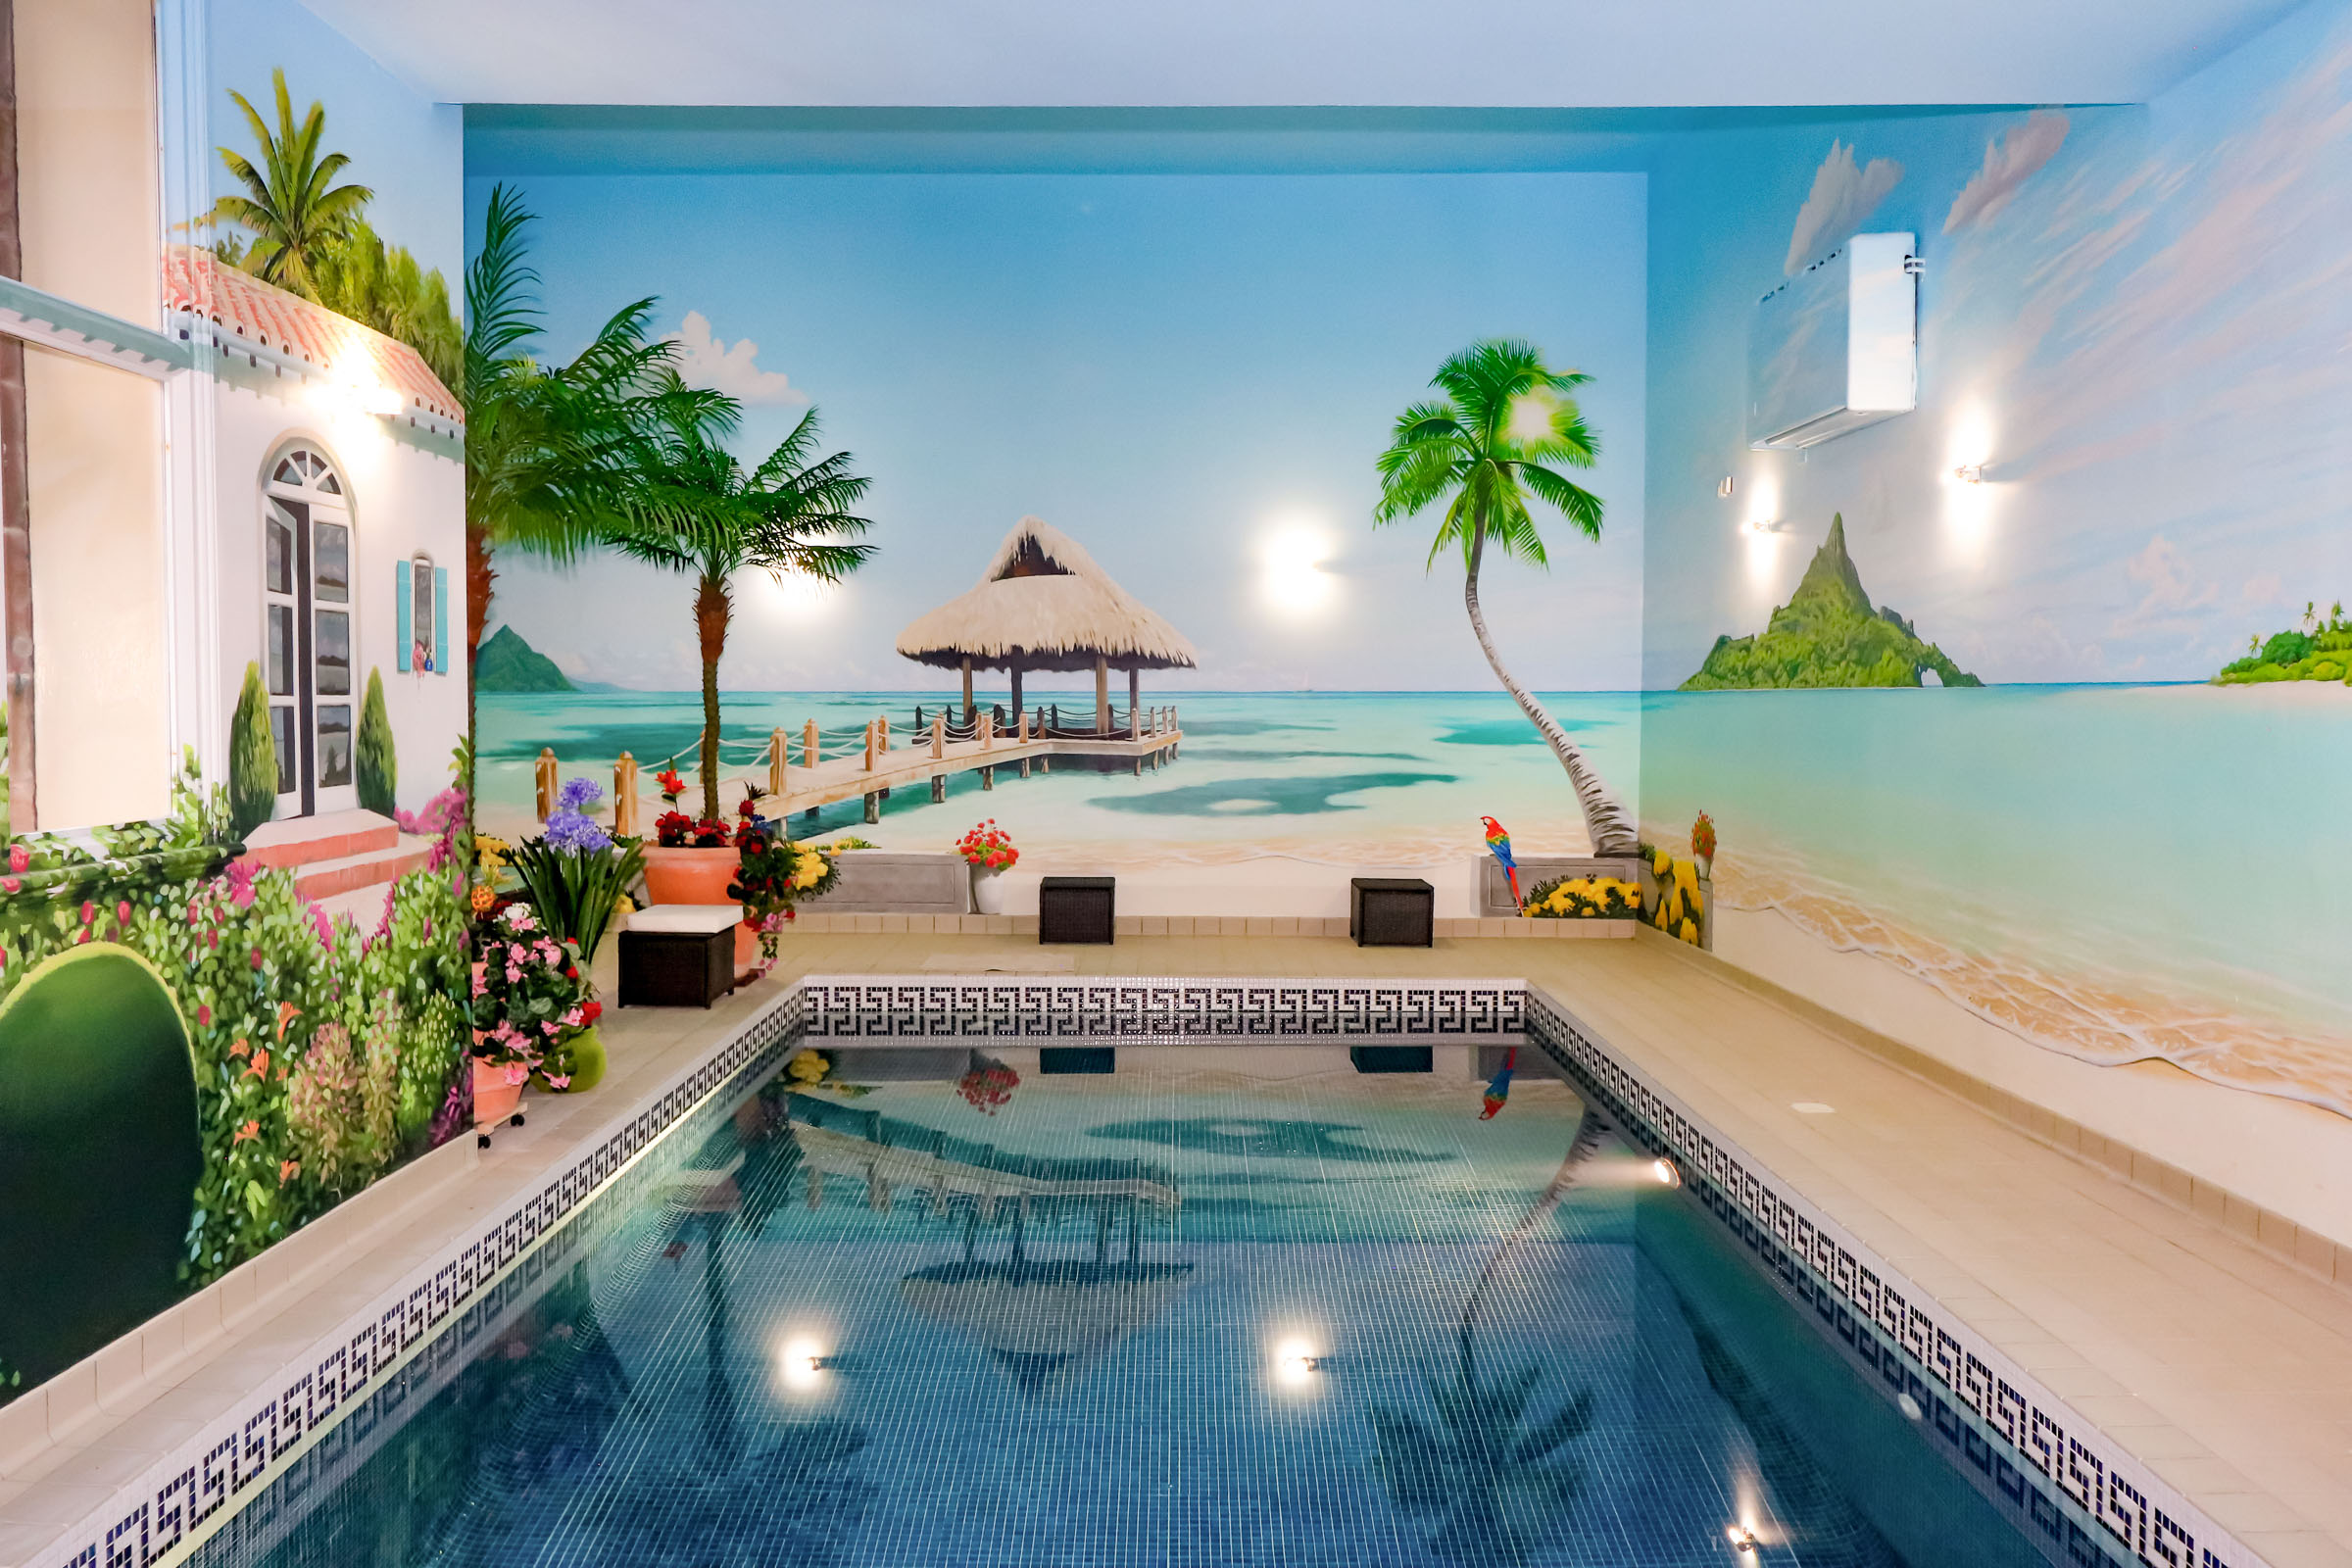 Caribbean Islands Mural around private indoor pool in the UK